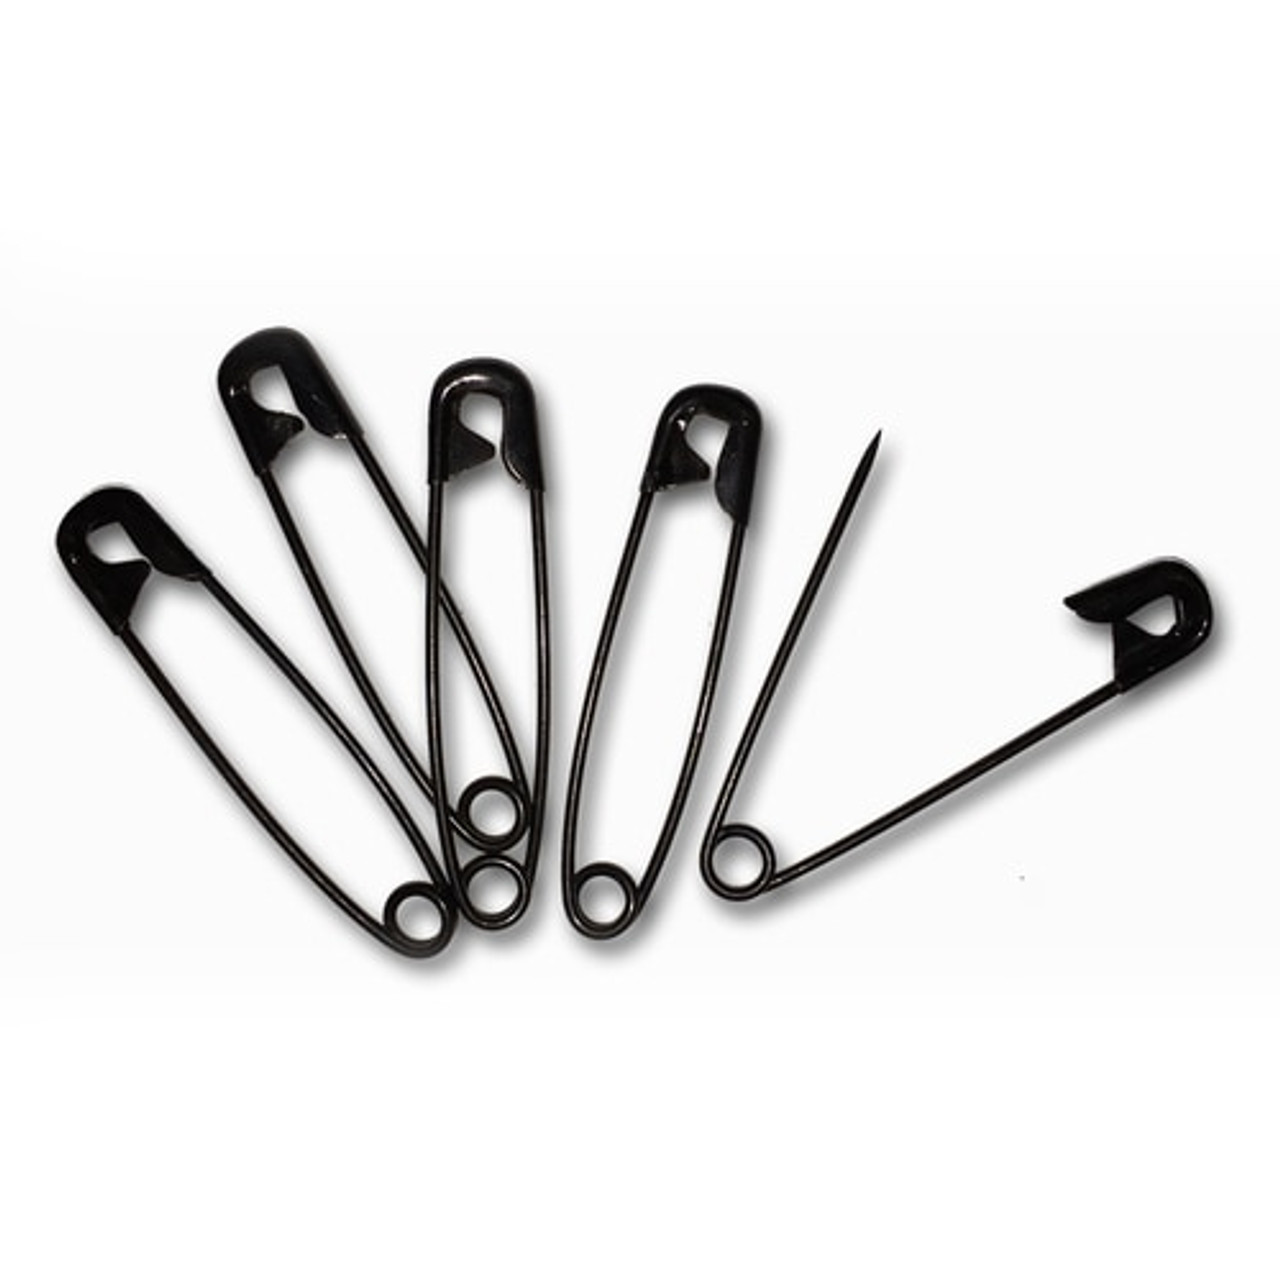 Black Safety Pins-assorted Sizes 40/pkg (30 Size 1/ 5 Size 2 / 5 Size 3) 